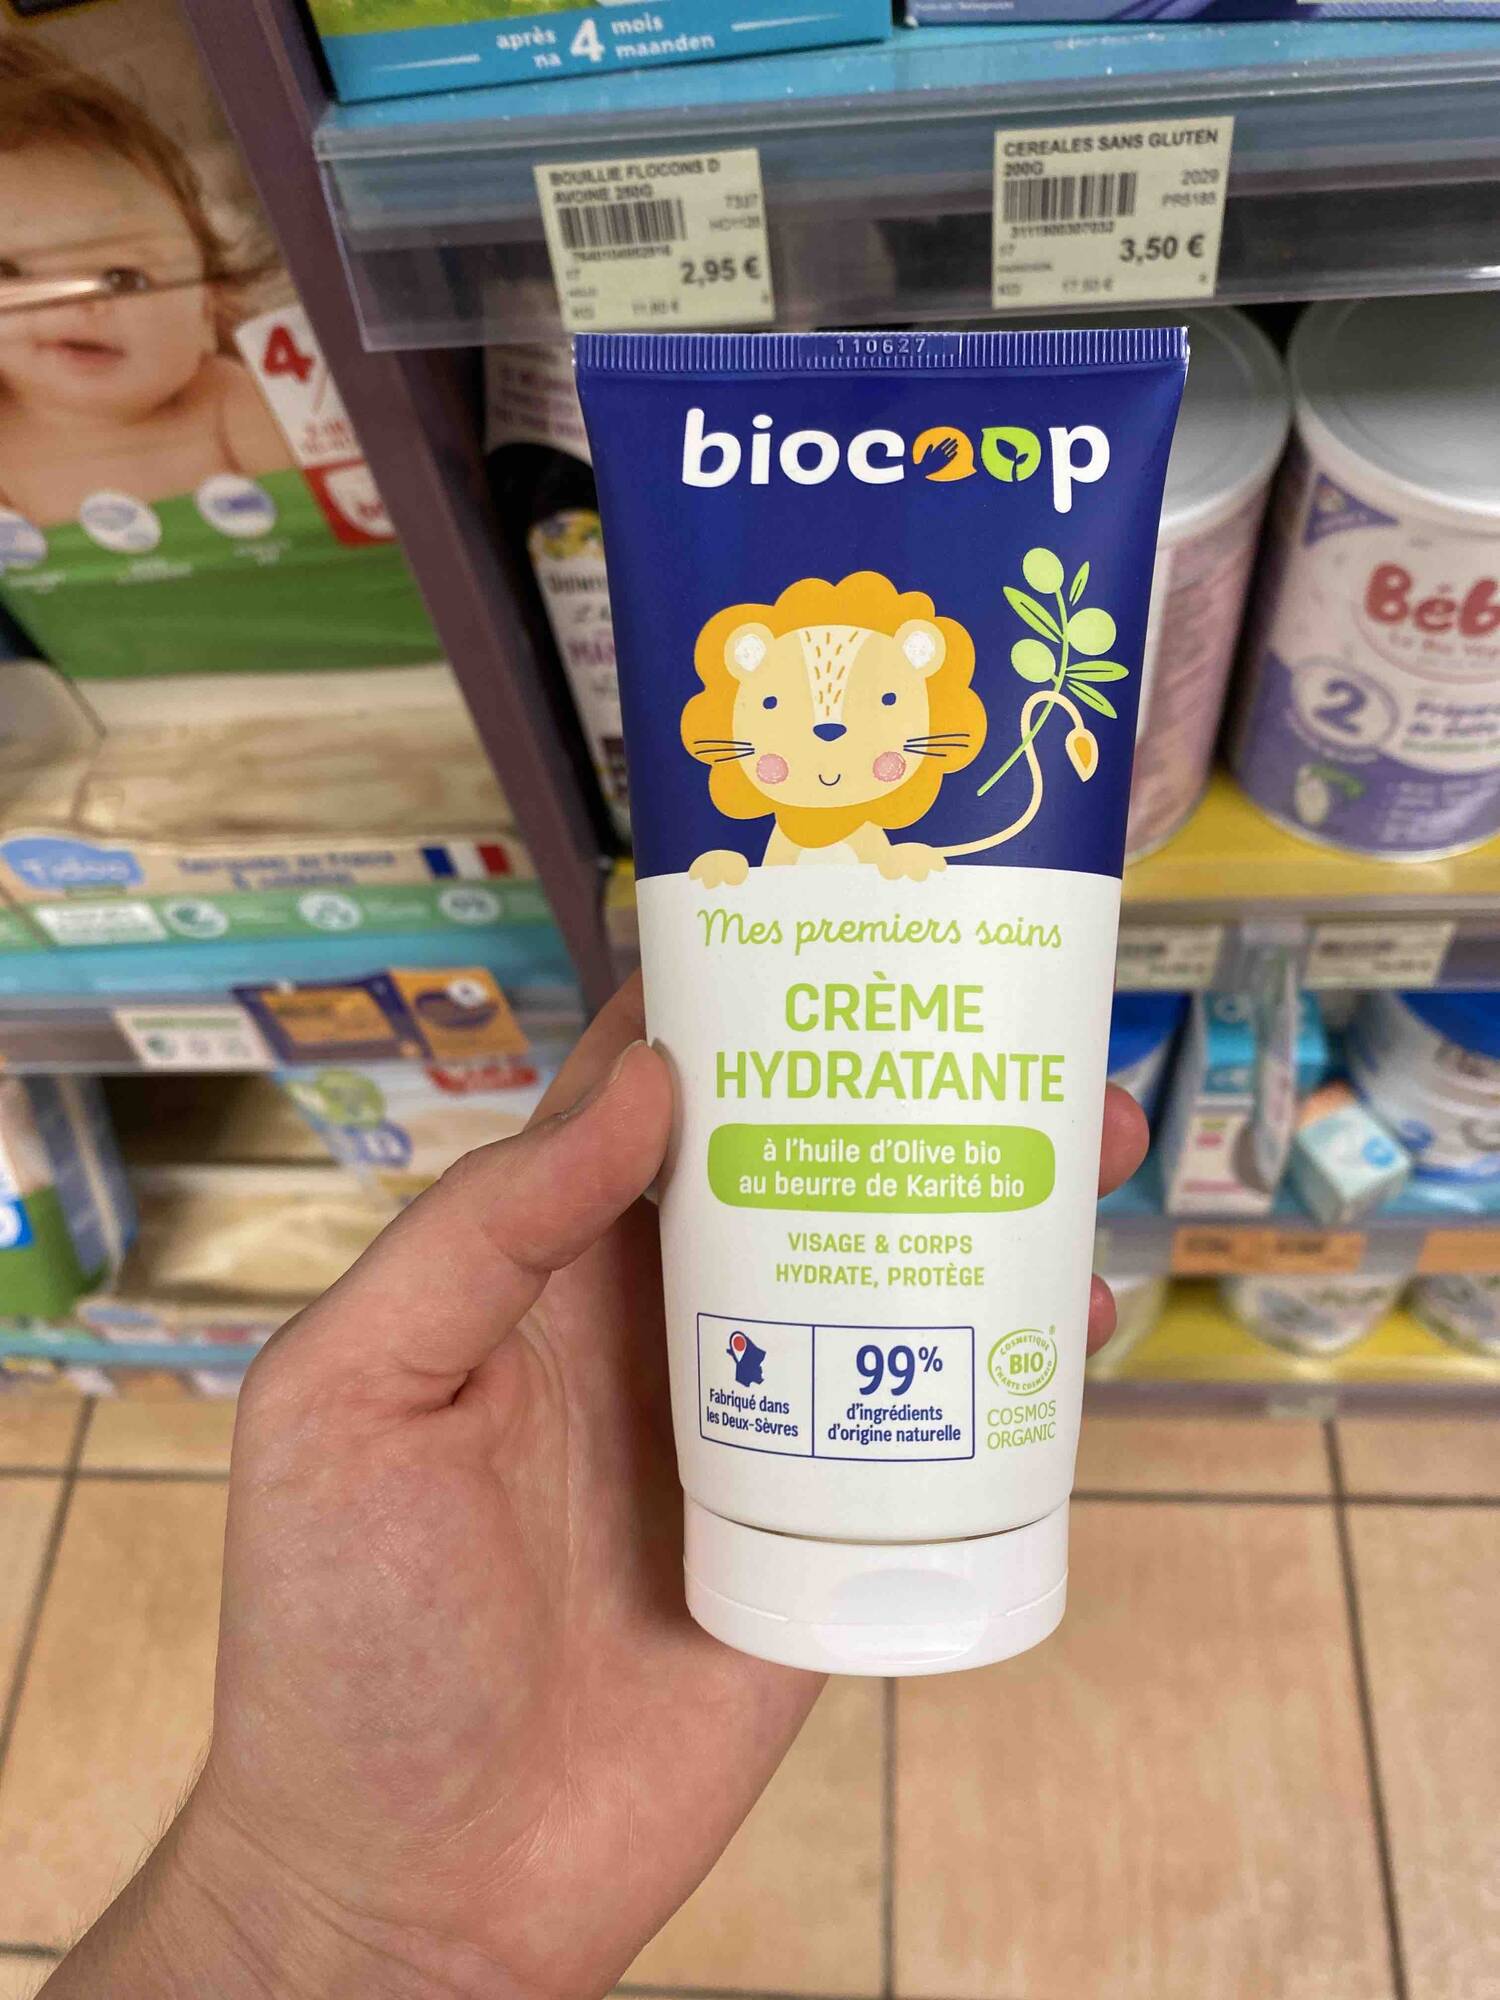 BIOCOOP - Mes premiers soins - Crème hydratante